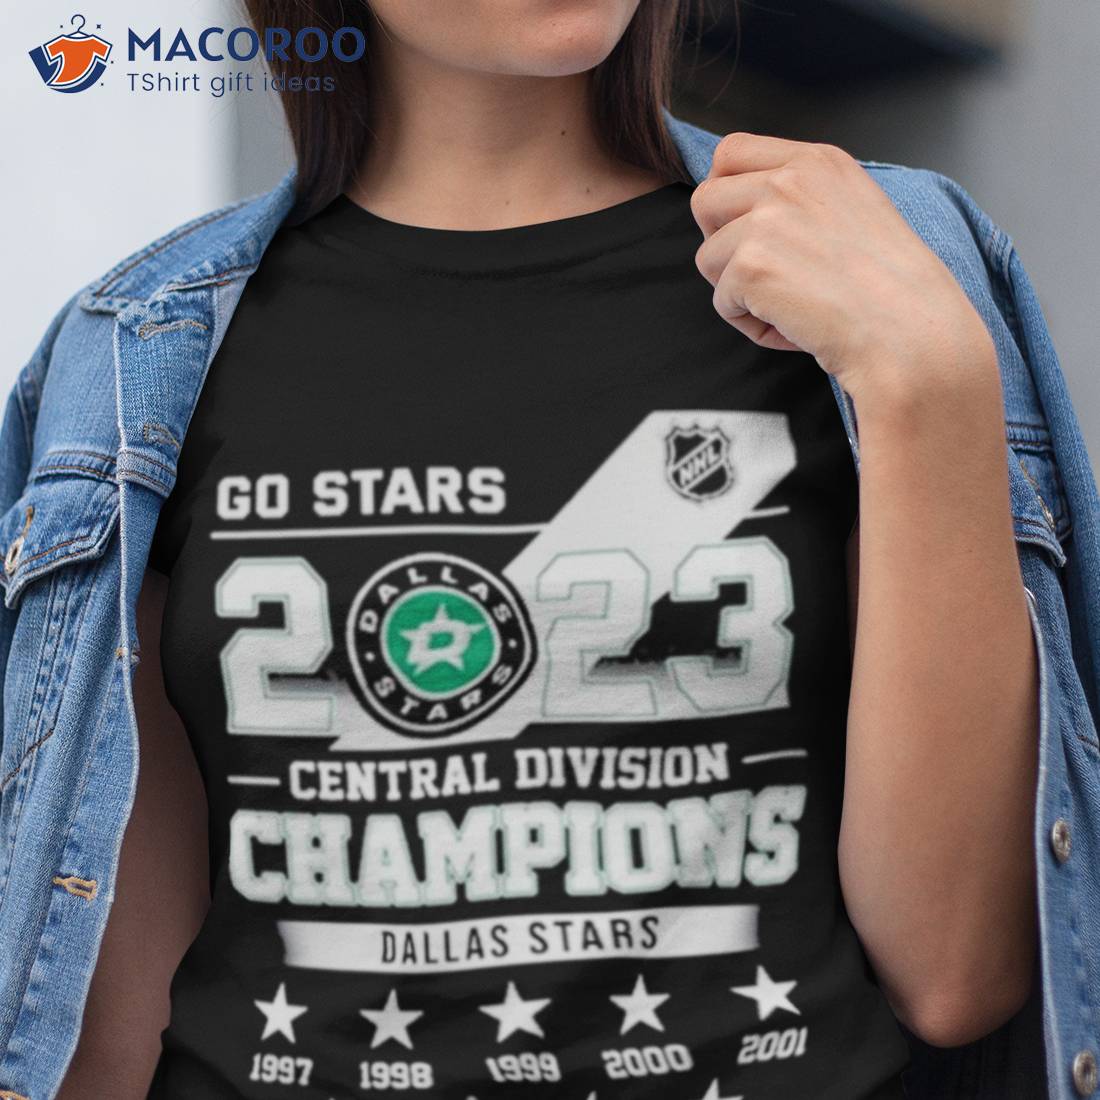 Go Stars Nhl Champion 2023 Central Division Dallas Stars Shirt